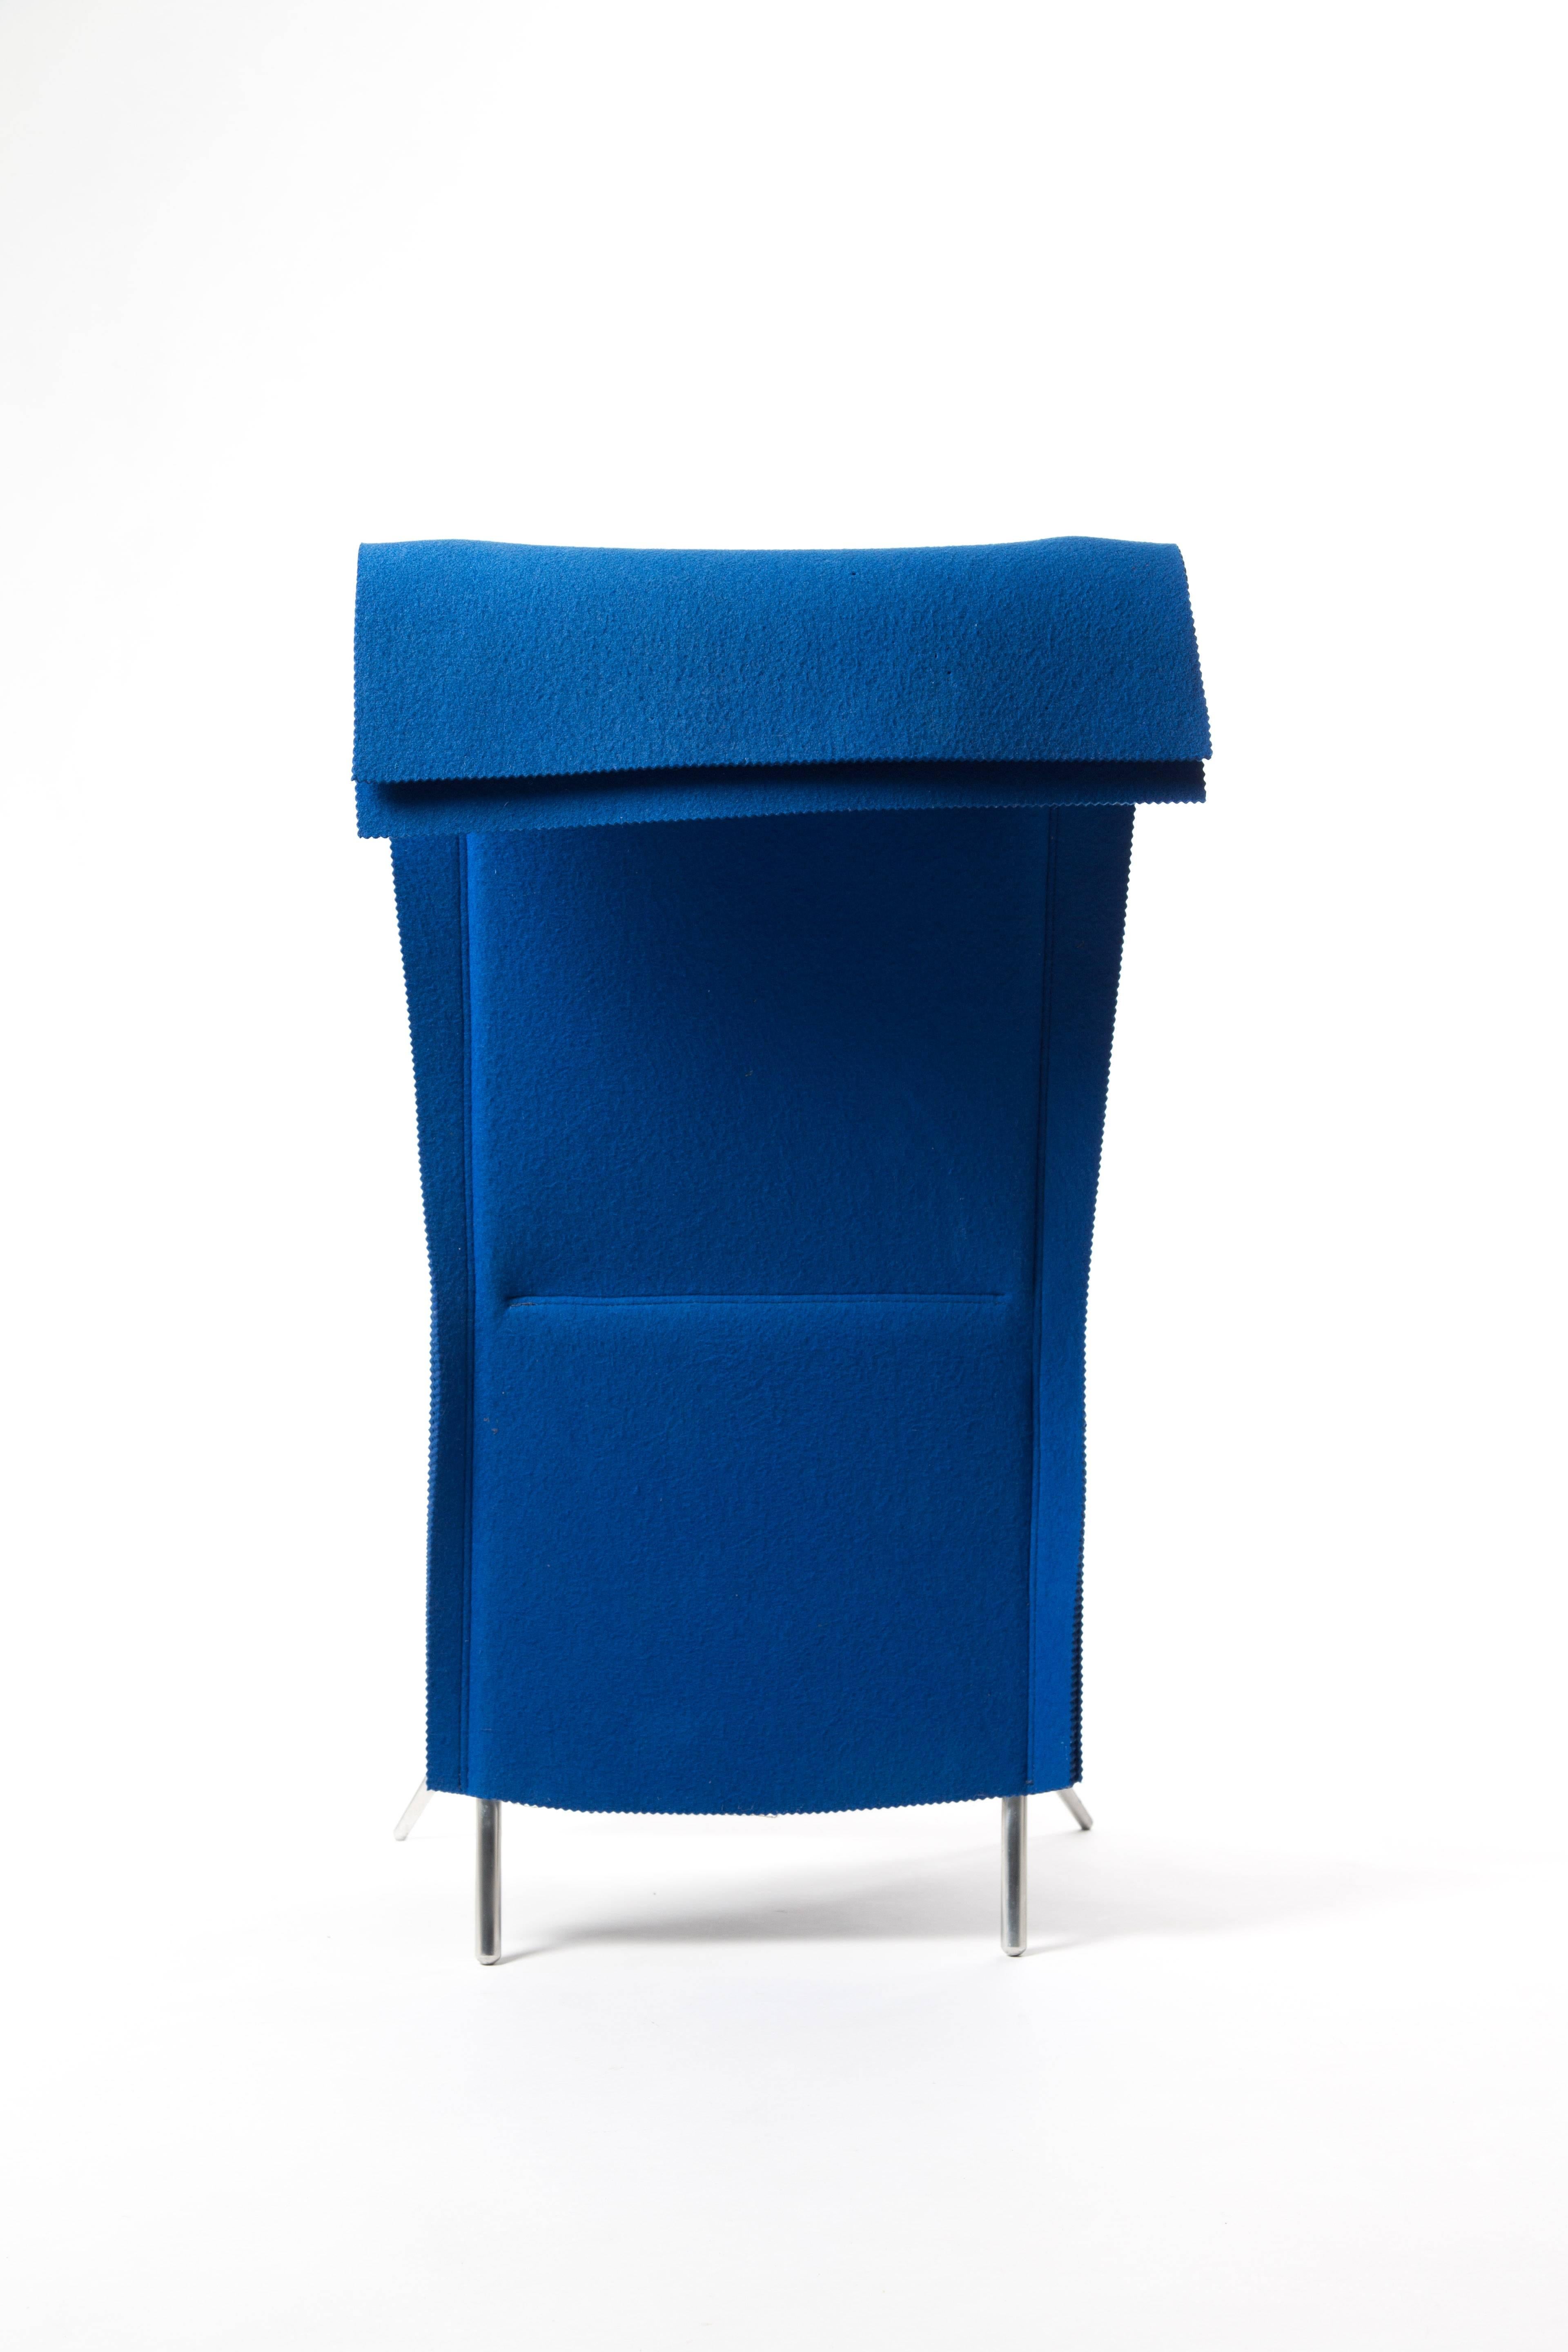 Borek Sipek Filzka Chair for Scarabas Made of Felt 1